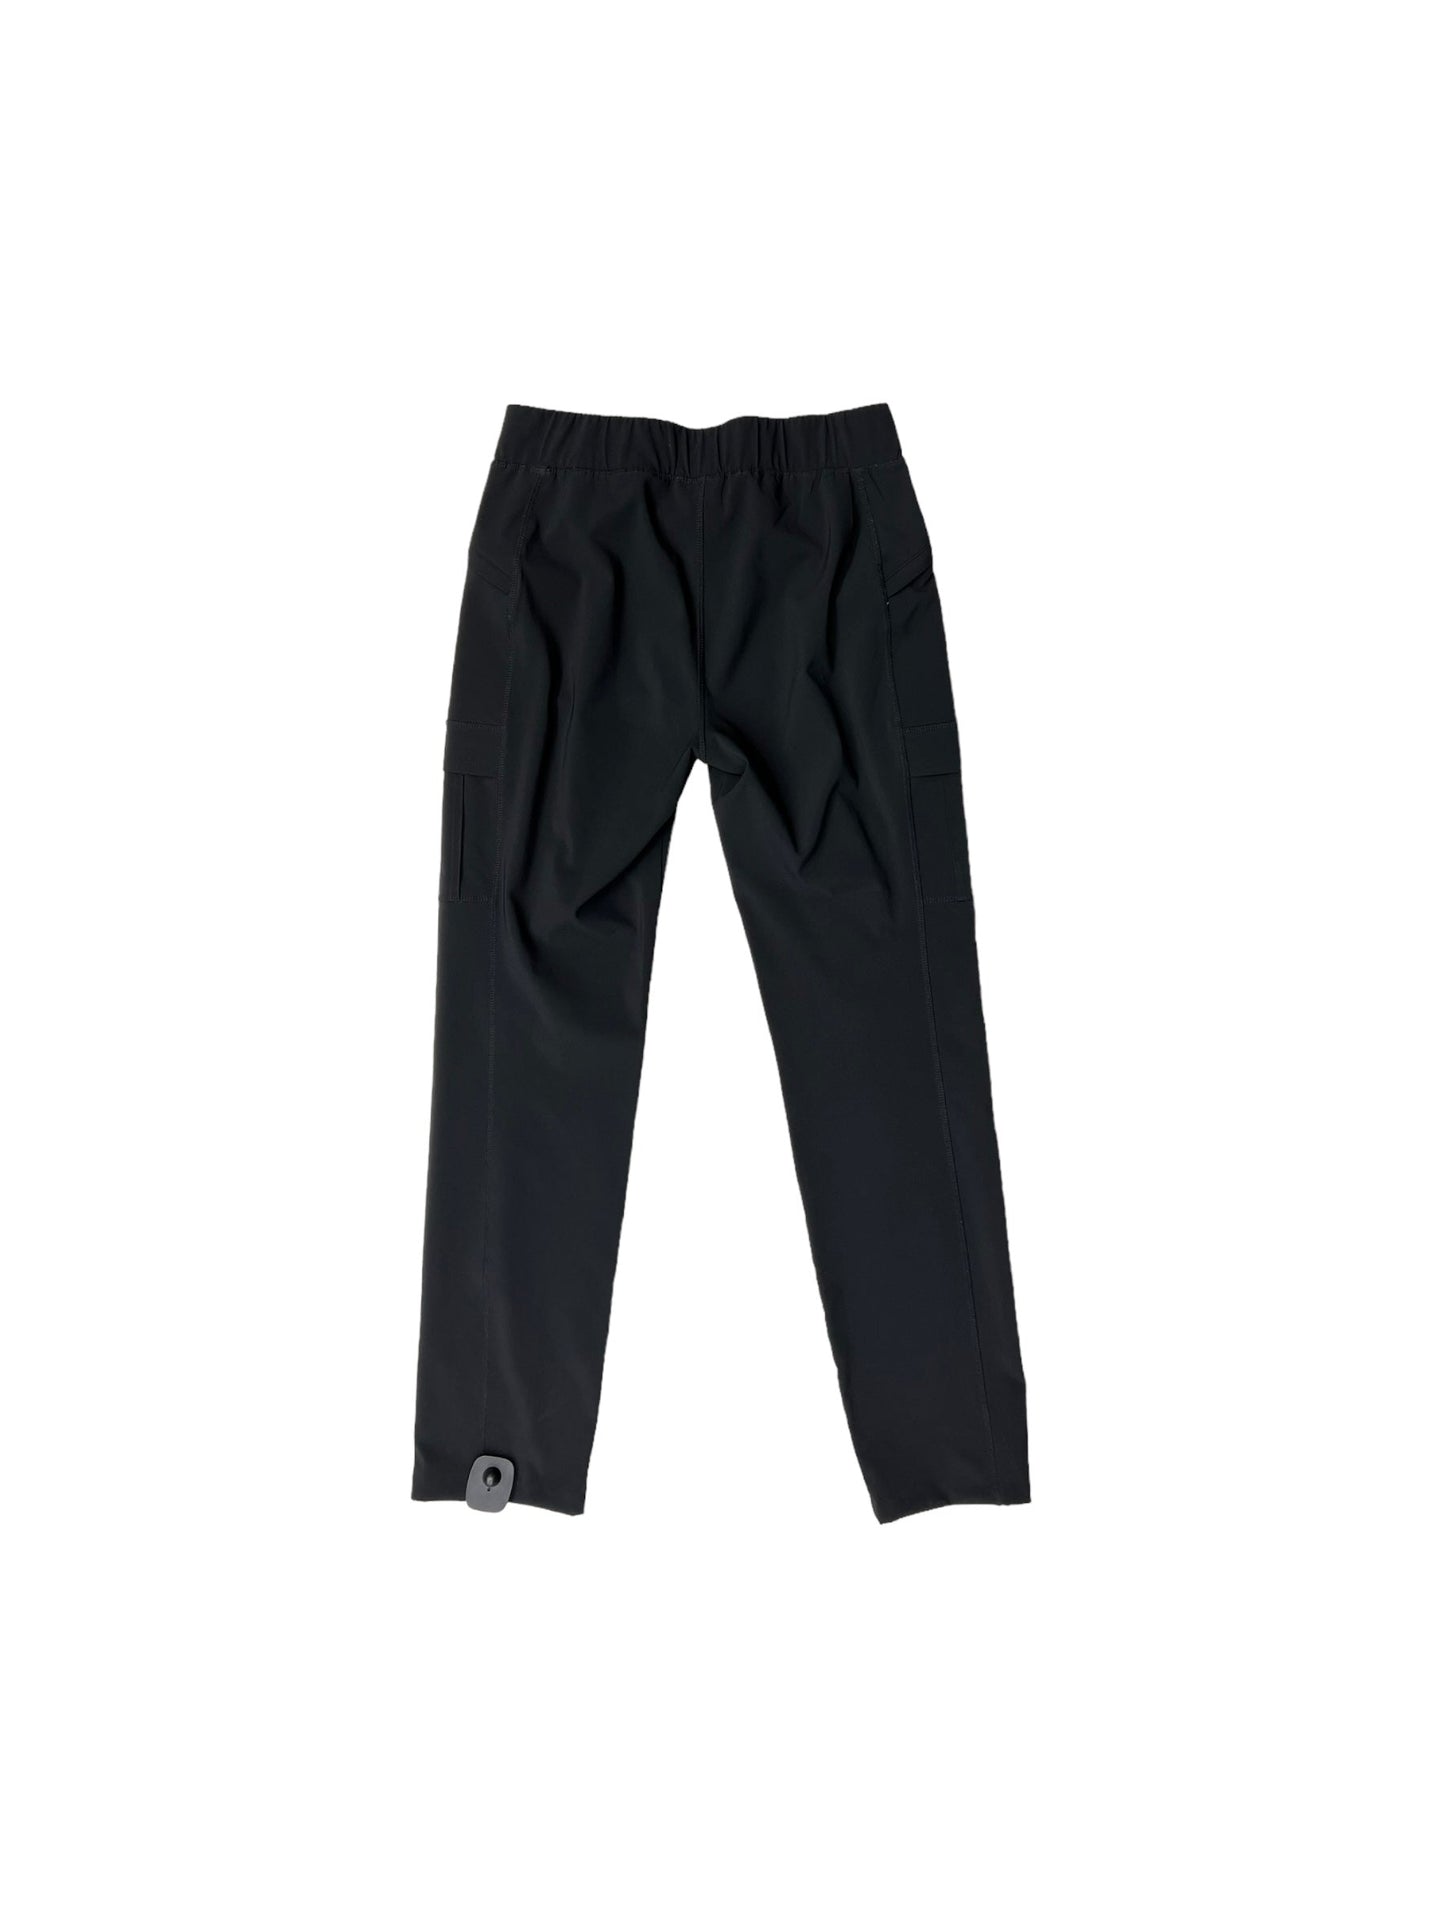 Athletic Pants By Eddie Bauer  Size: 6